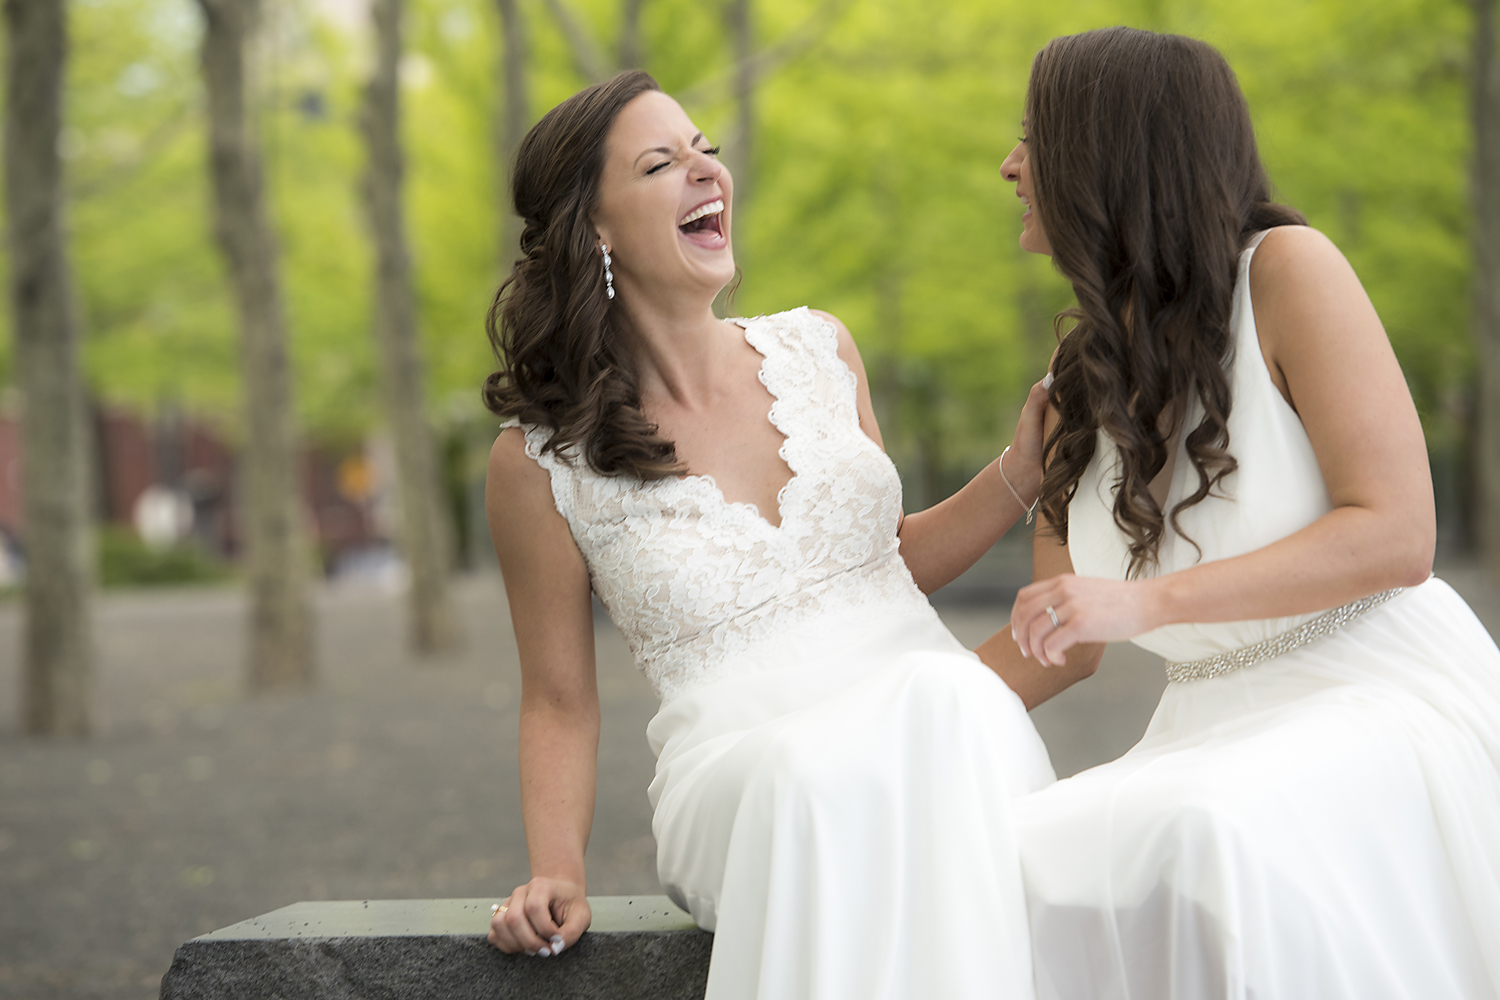 brides laugh during their portraits in Hoboken on their wedding day. LGBTQ Hoboken wedding photographer